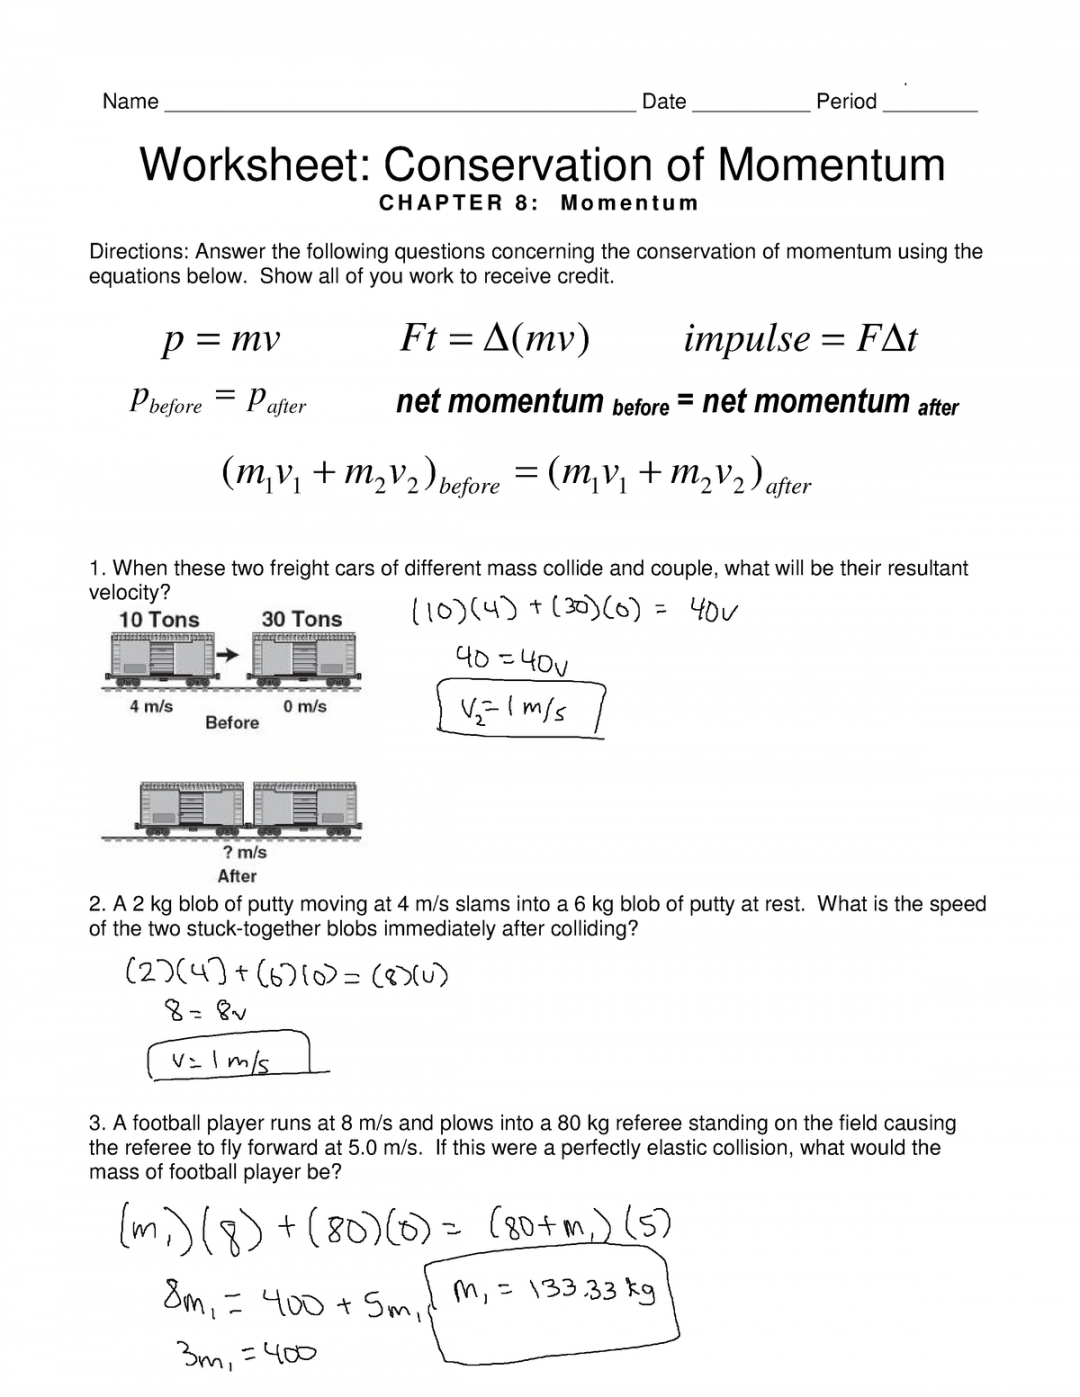 Physics Conservation of Momentum Worksheet - Name Date - Studocu